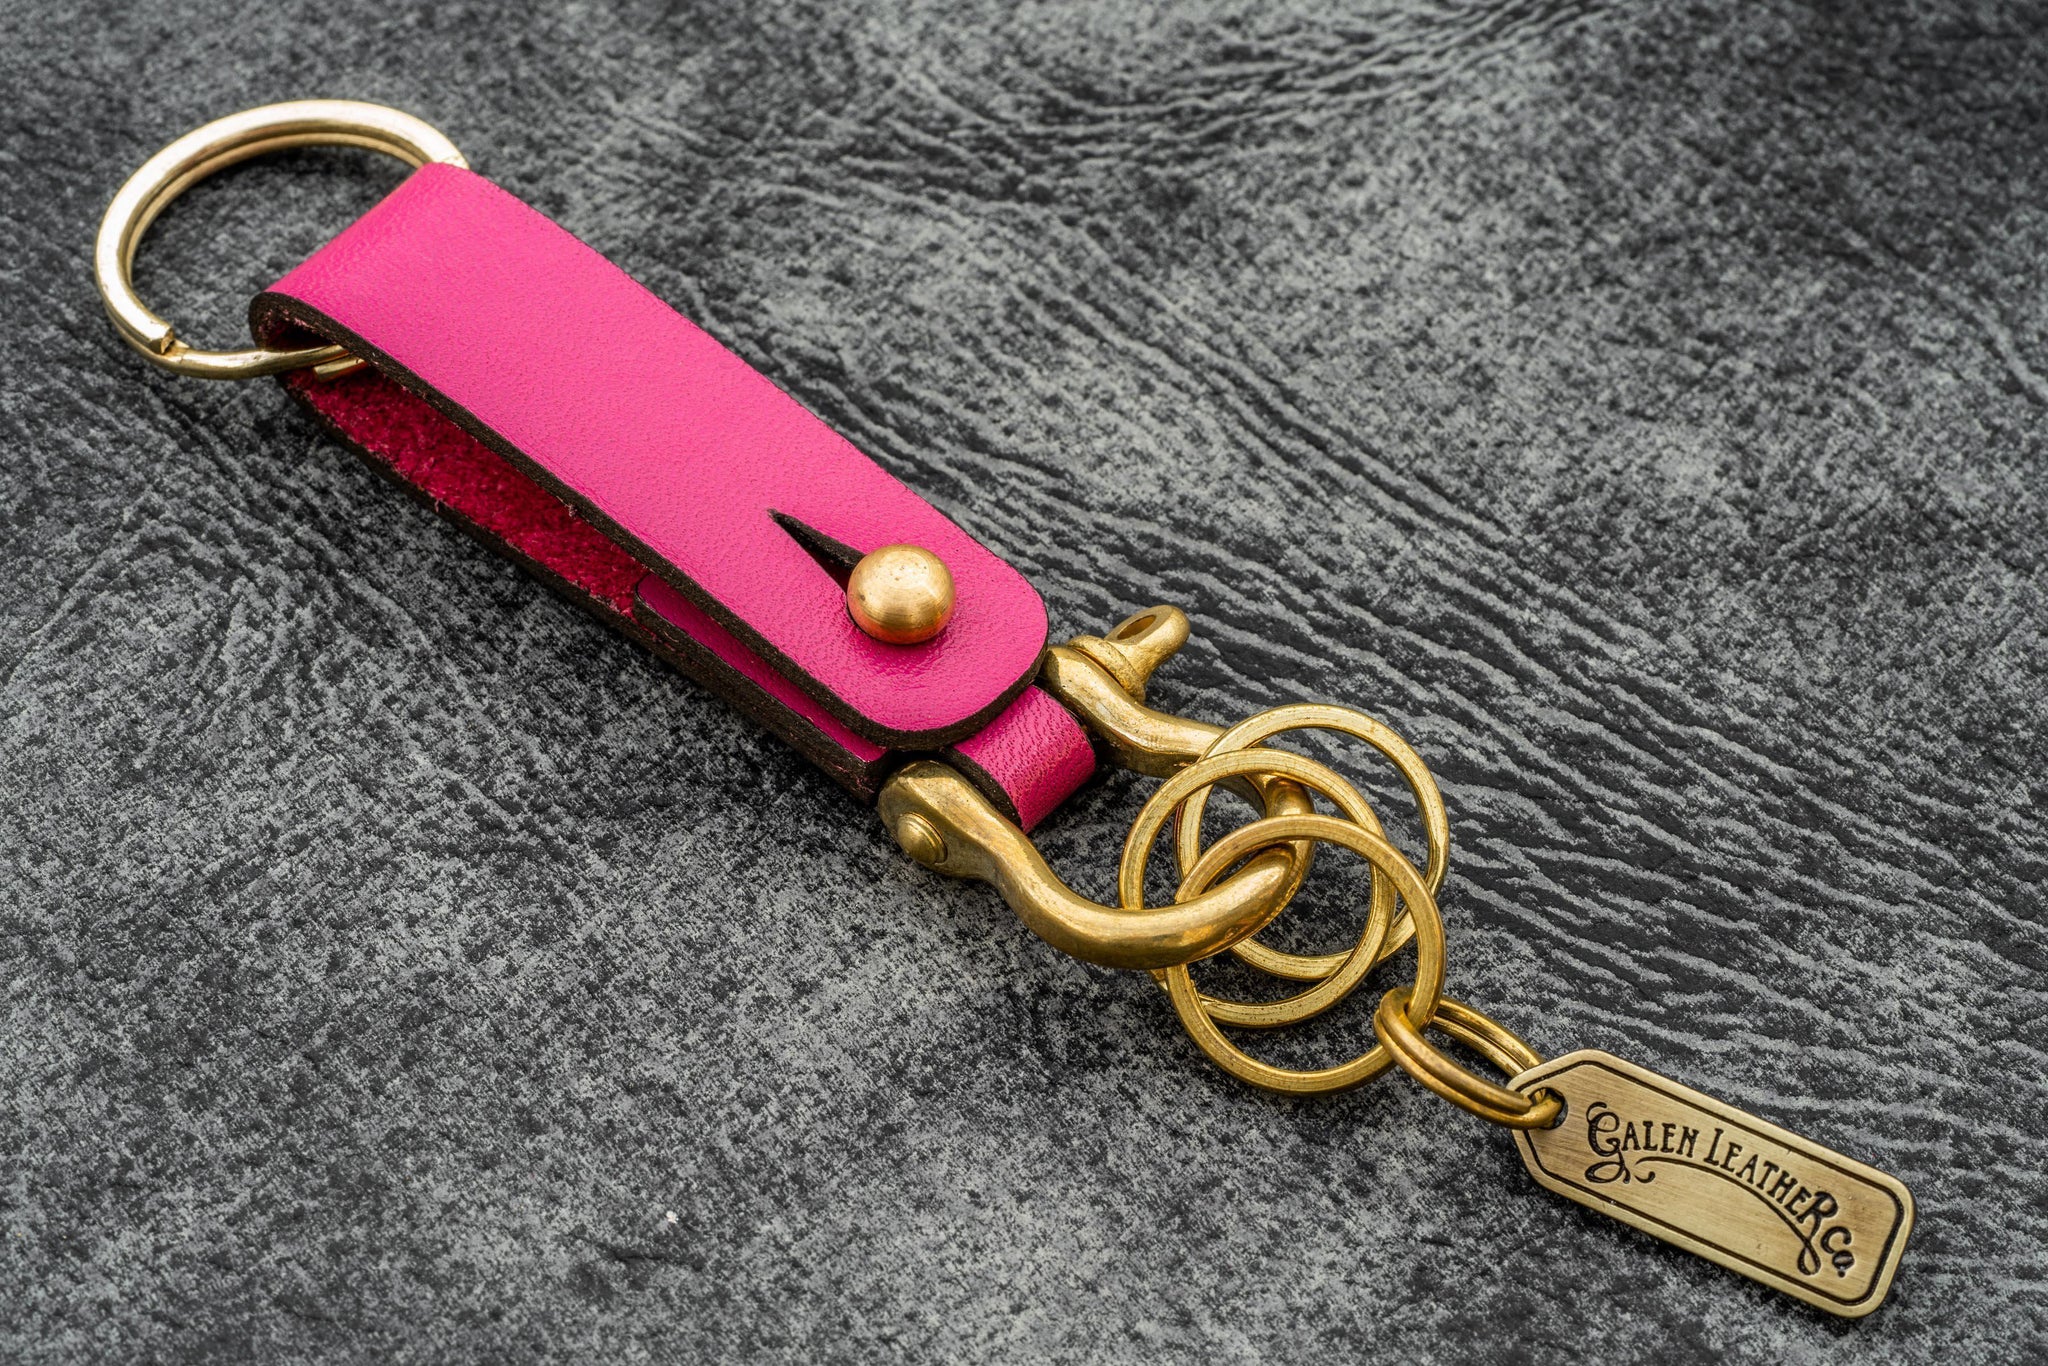 Pink Monogram Leather Keychain